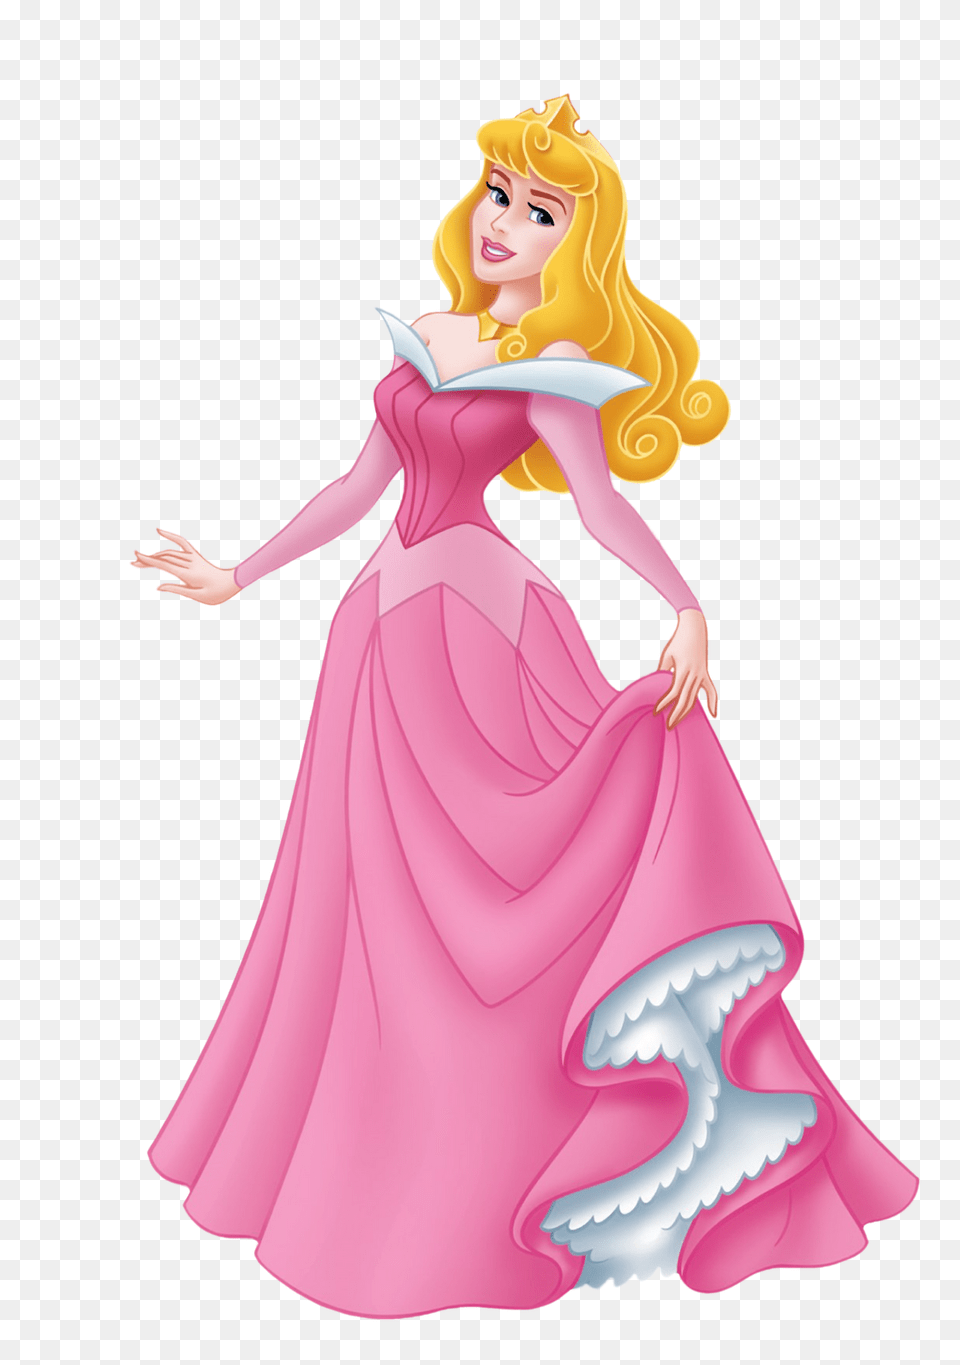 Aurora Background Princesa Peach, Clothing, Figurine, Dress, Adult Free Transparent Png